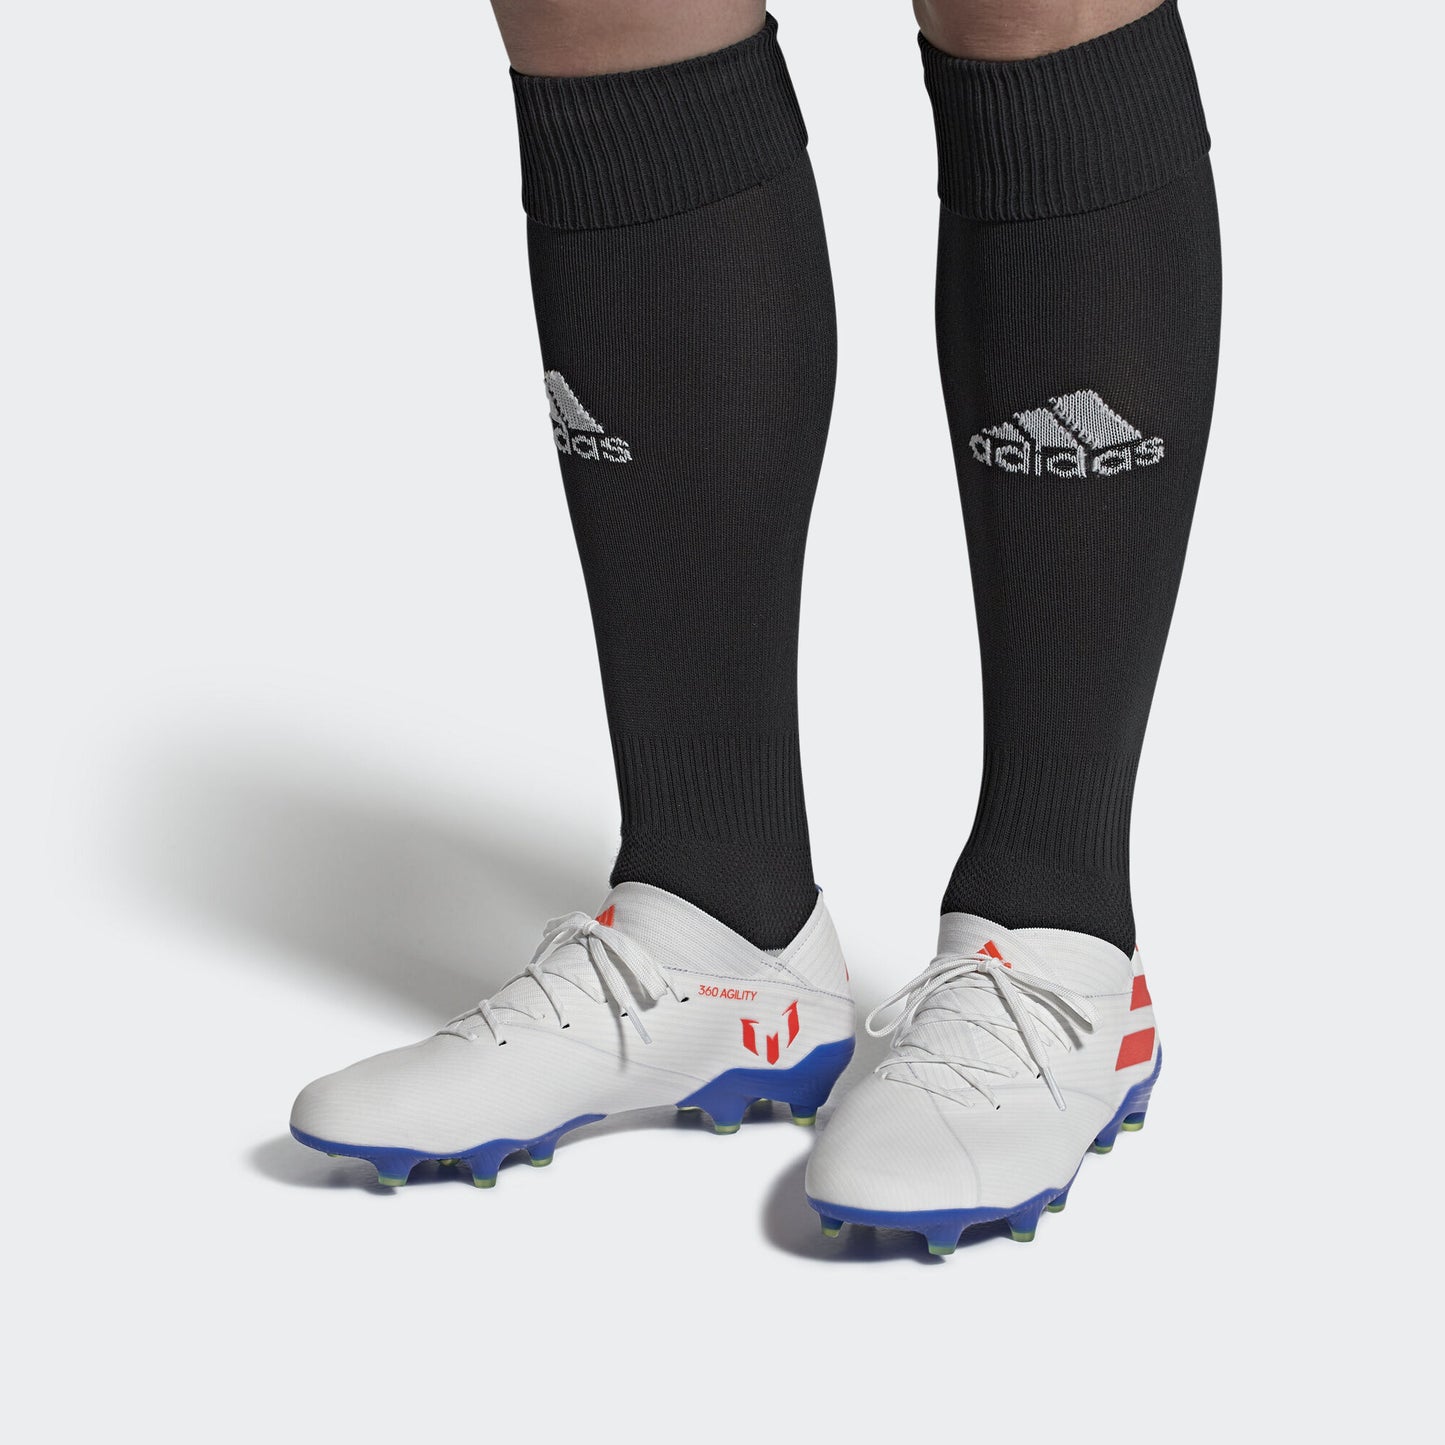 adidas Nemeziz Messi 19.1 FG Mens - Footwear White